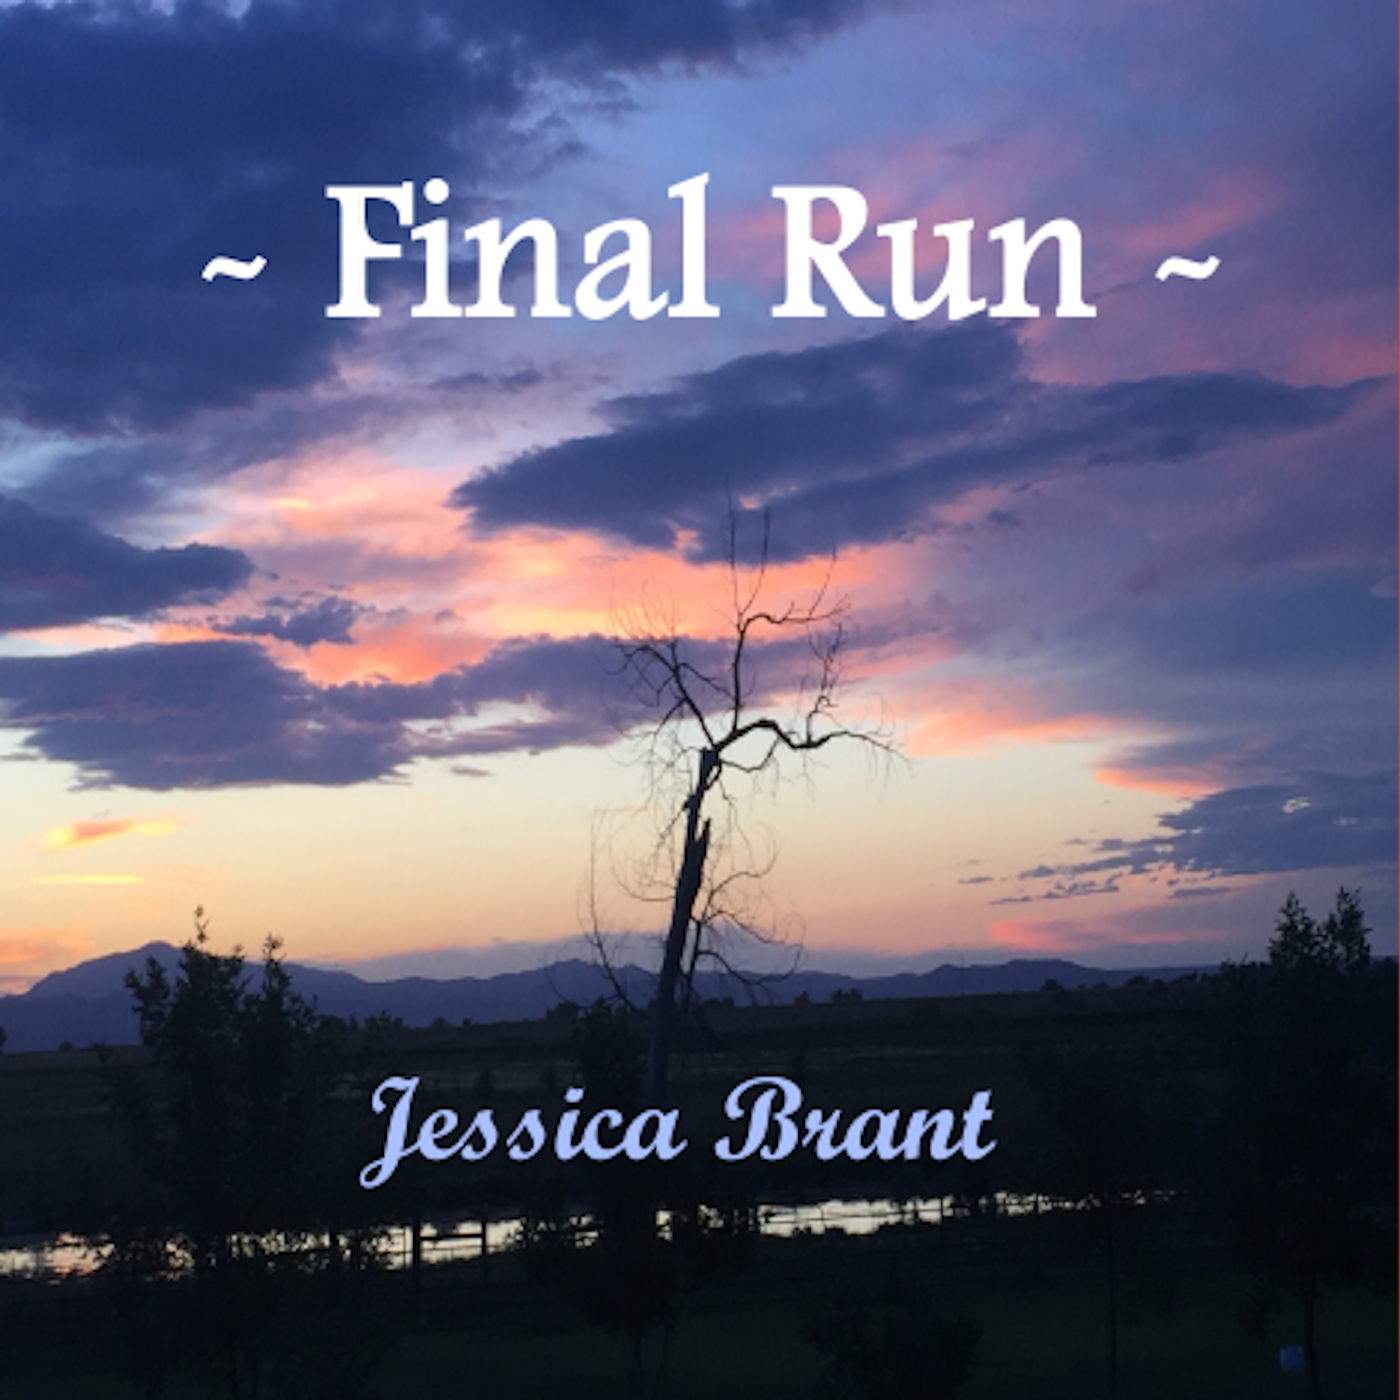 Final Run CD image.